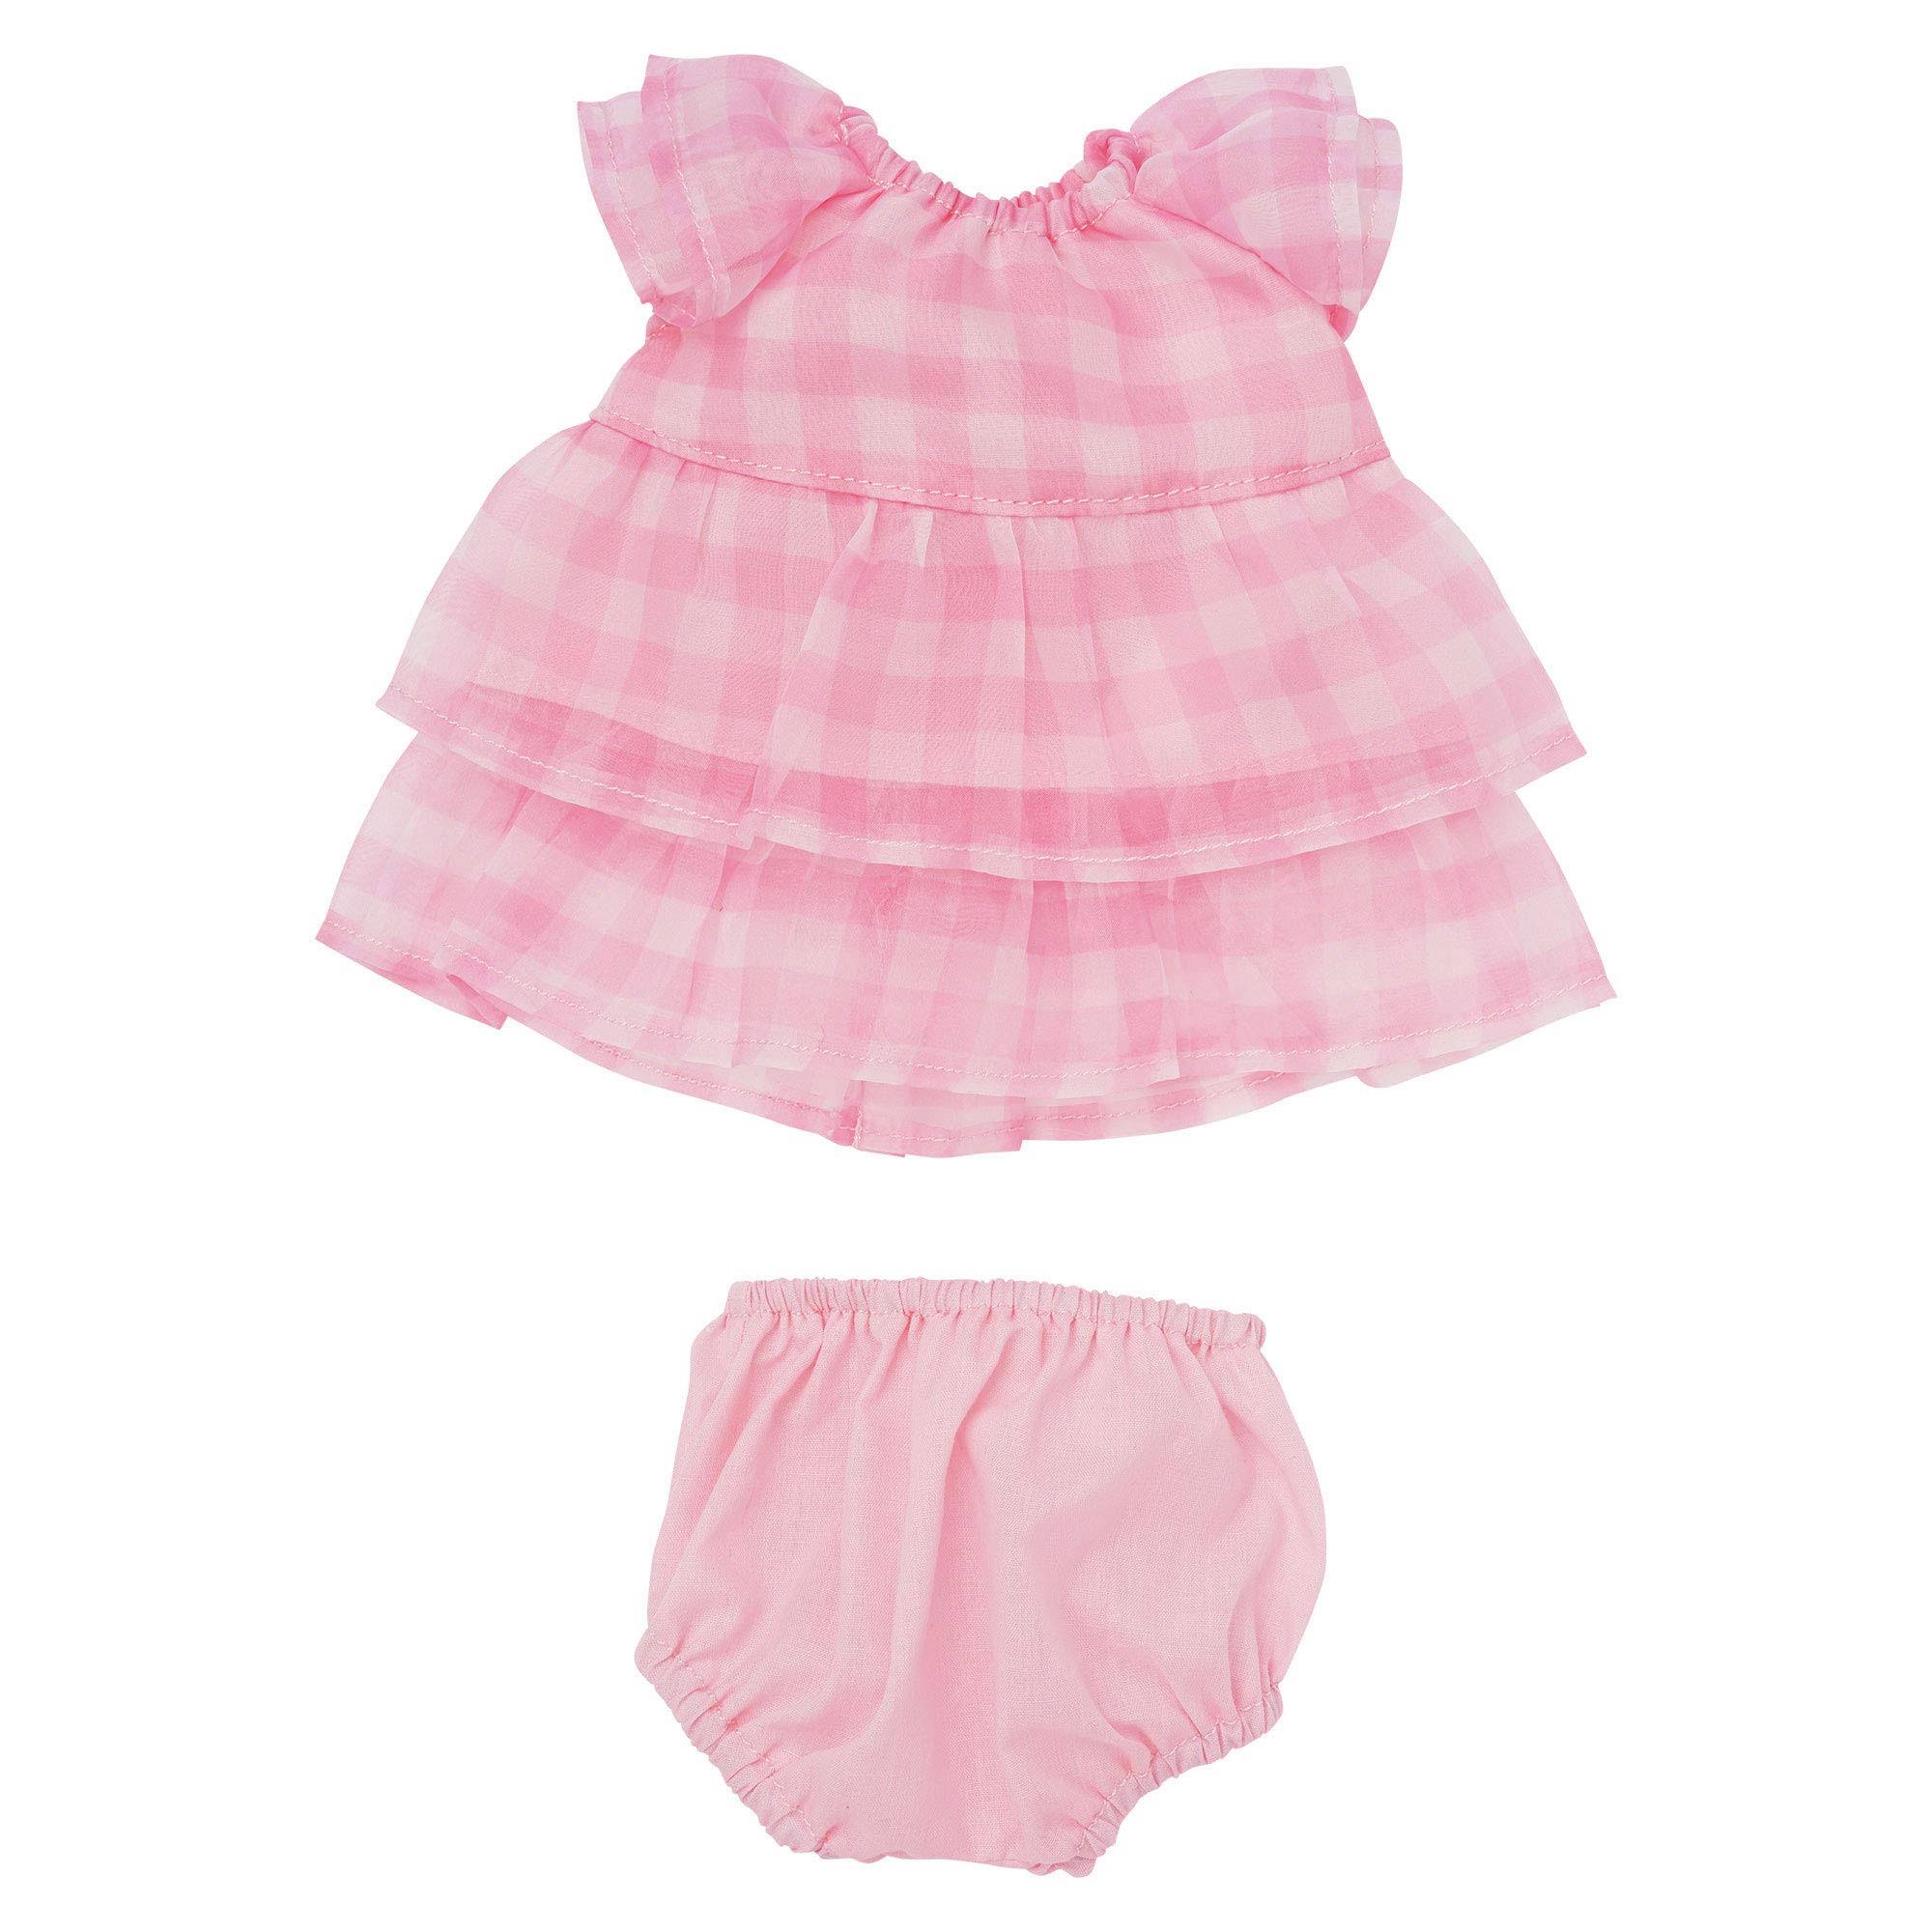 Manhattan Toy Baby Stella Pretty in Pink Baby Doll Dress for 15" Baby Dolls